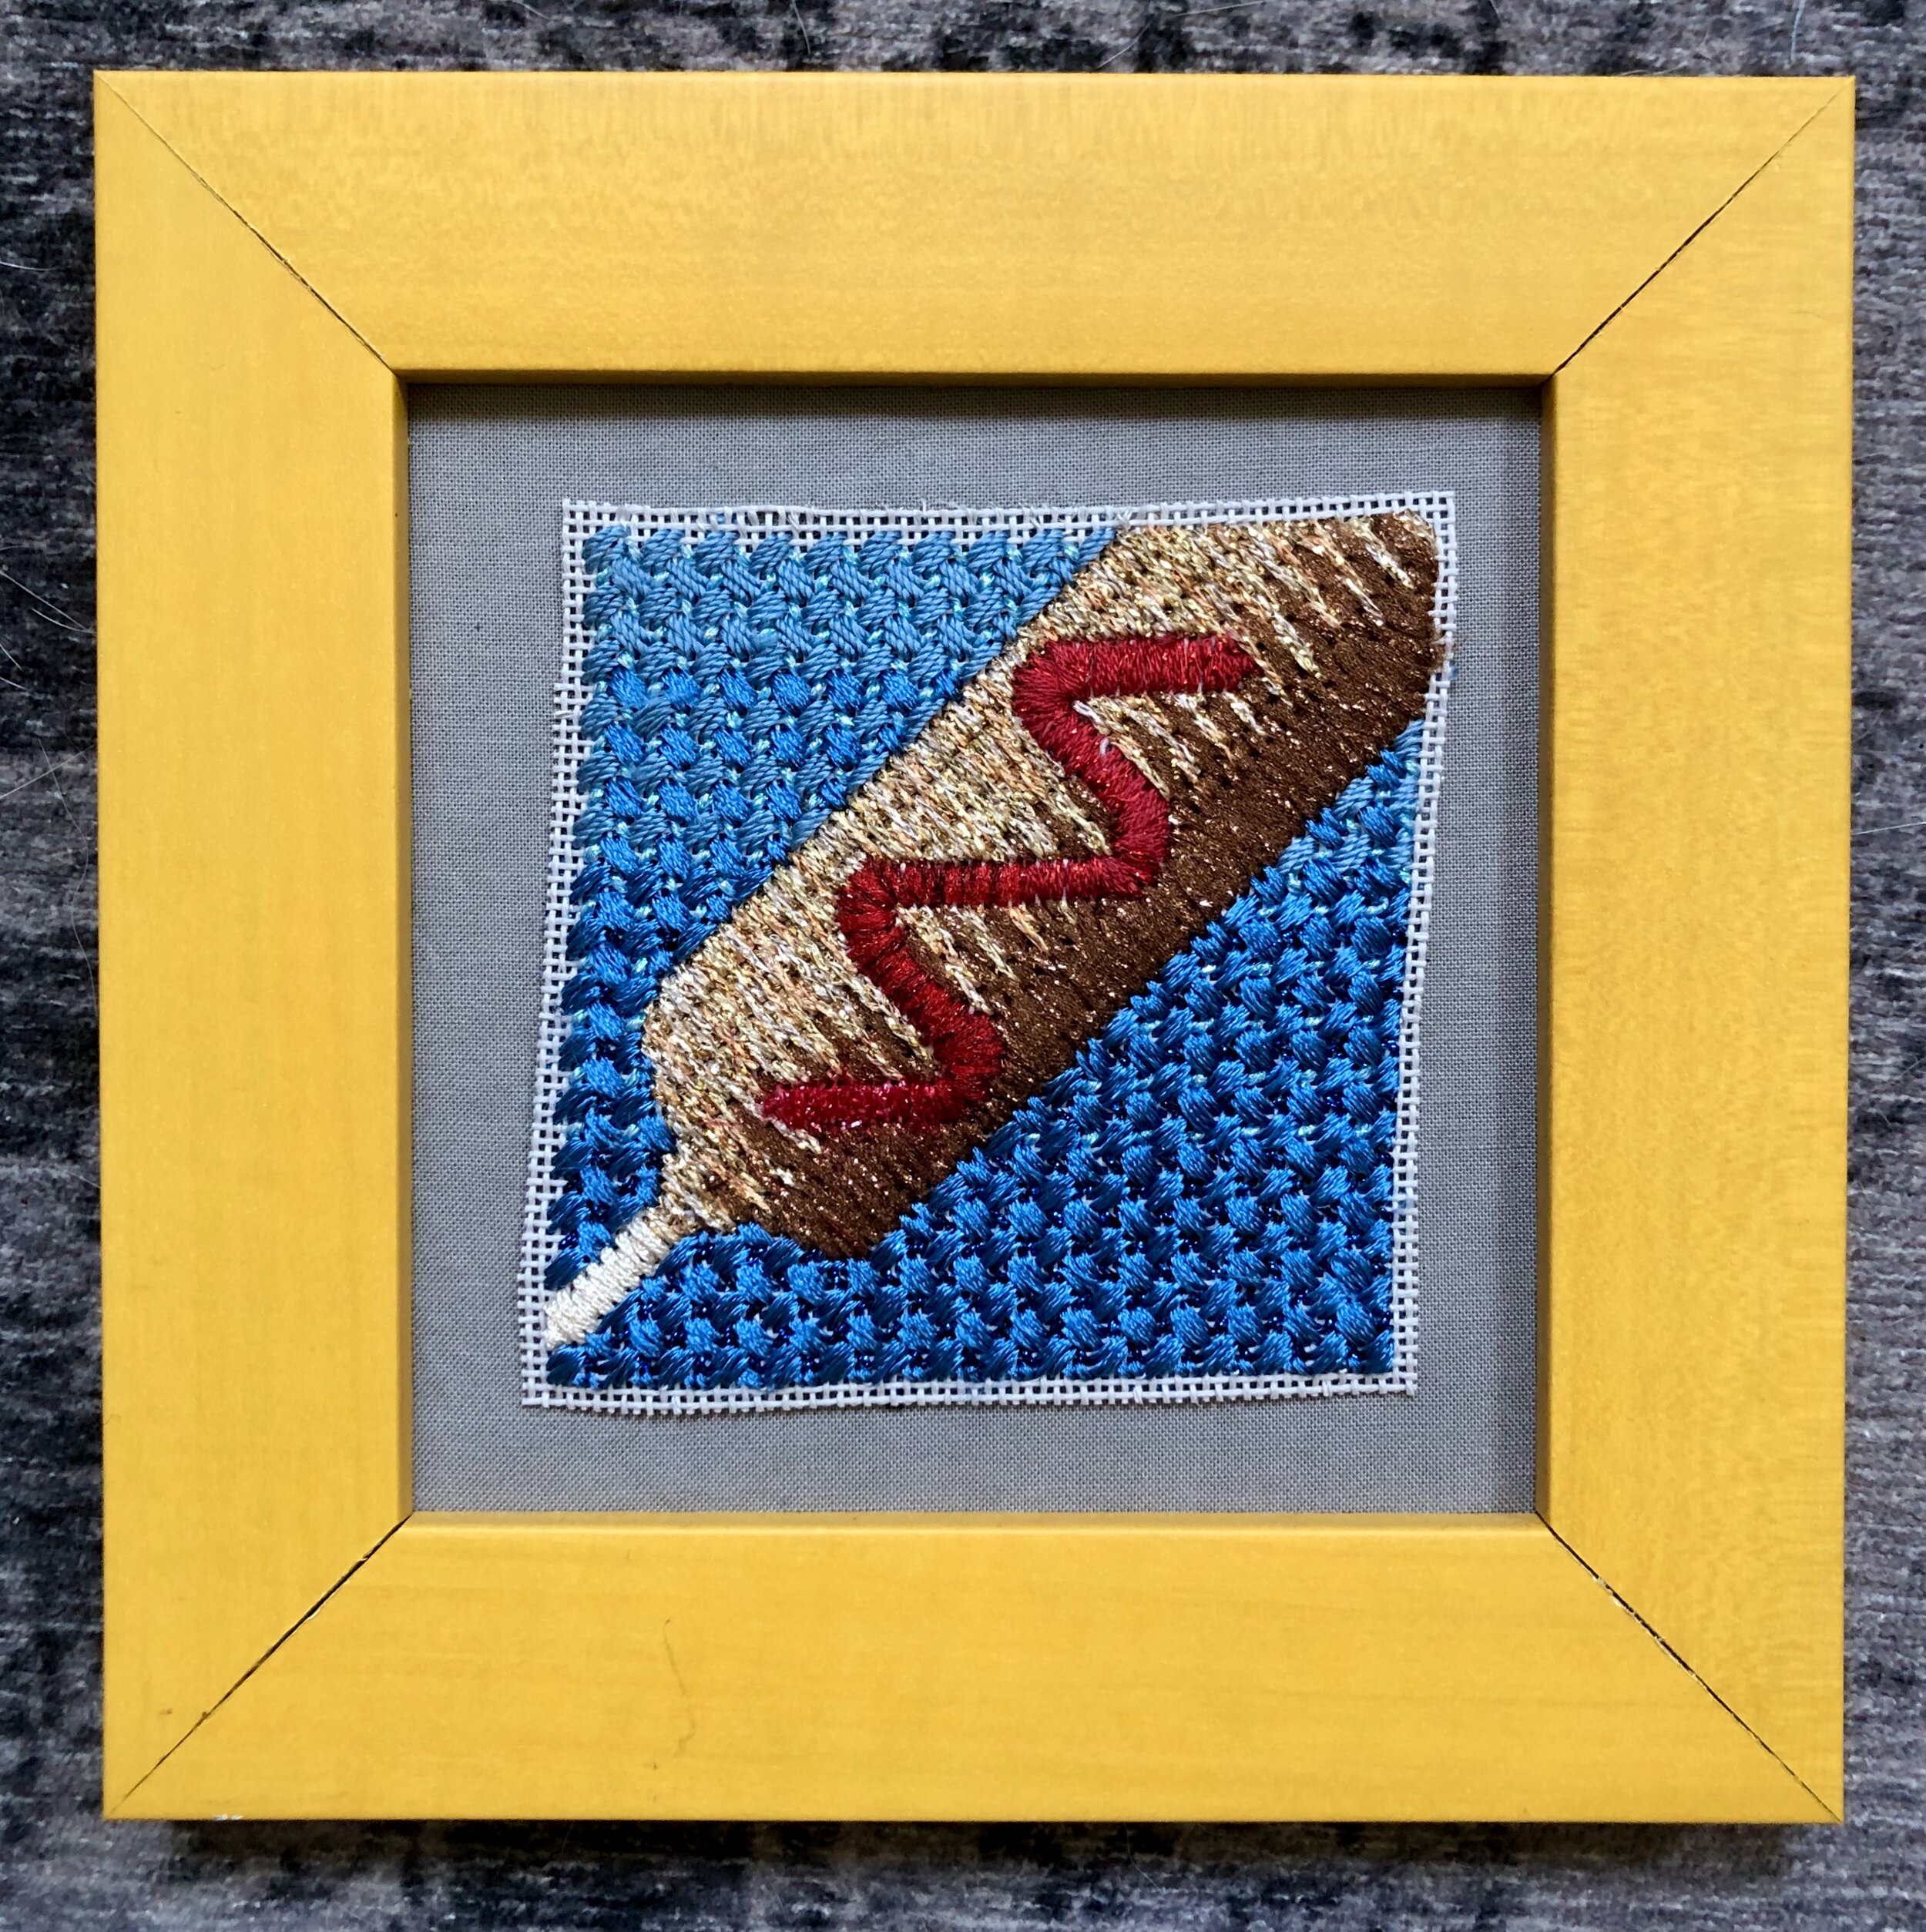   Corn Dog,  2019. Polyester &amp; cotton on needlepoint canvas. 3.5” x 3.5”. 